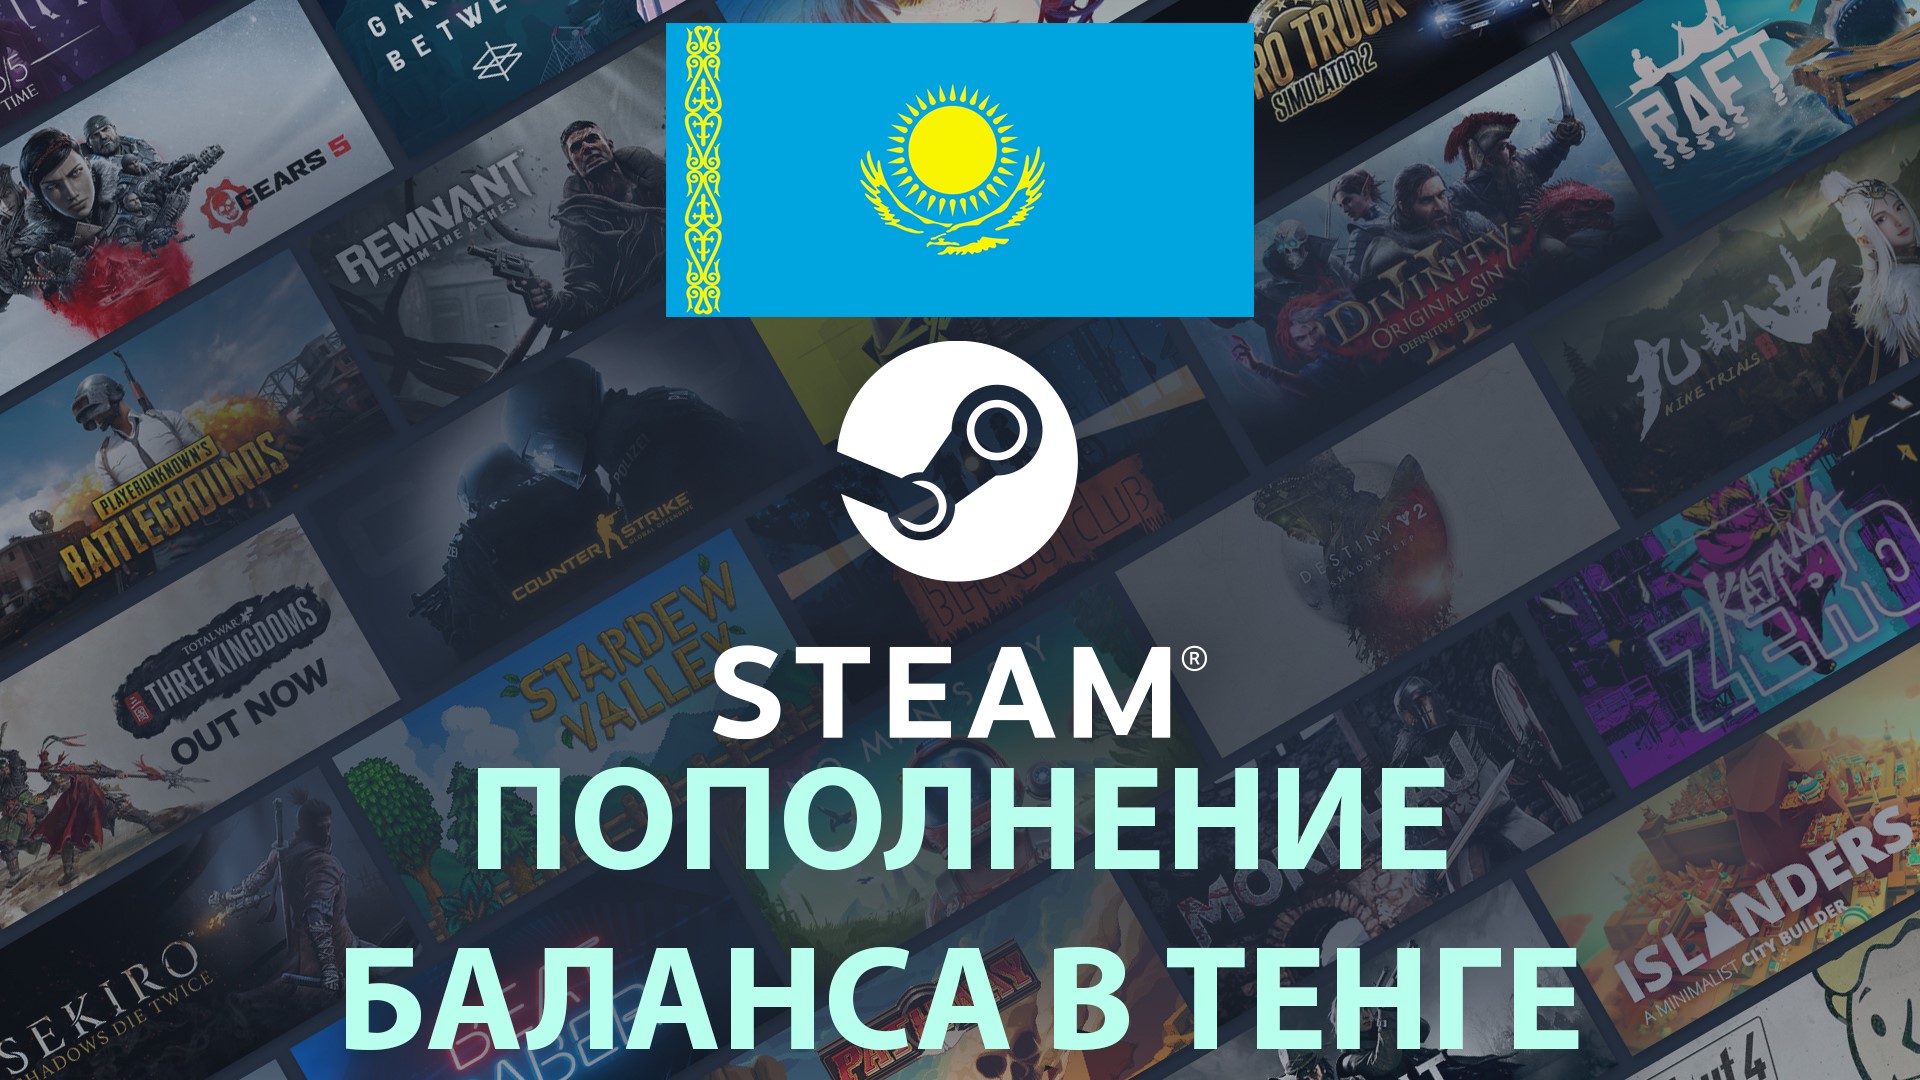 Steam казахстан не работает фото 12